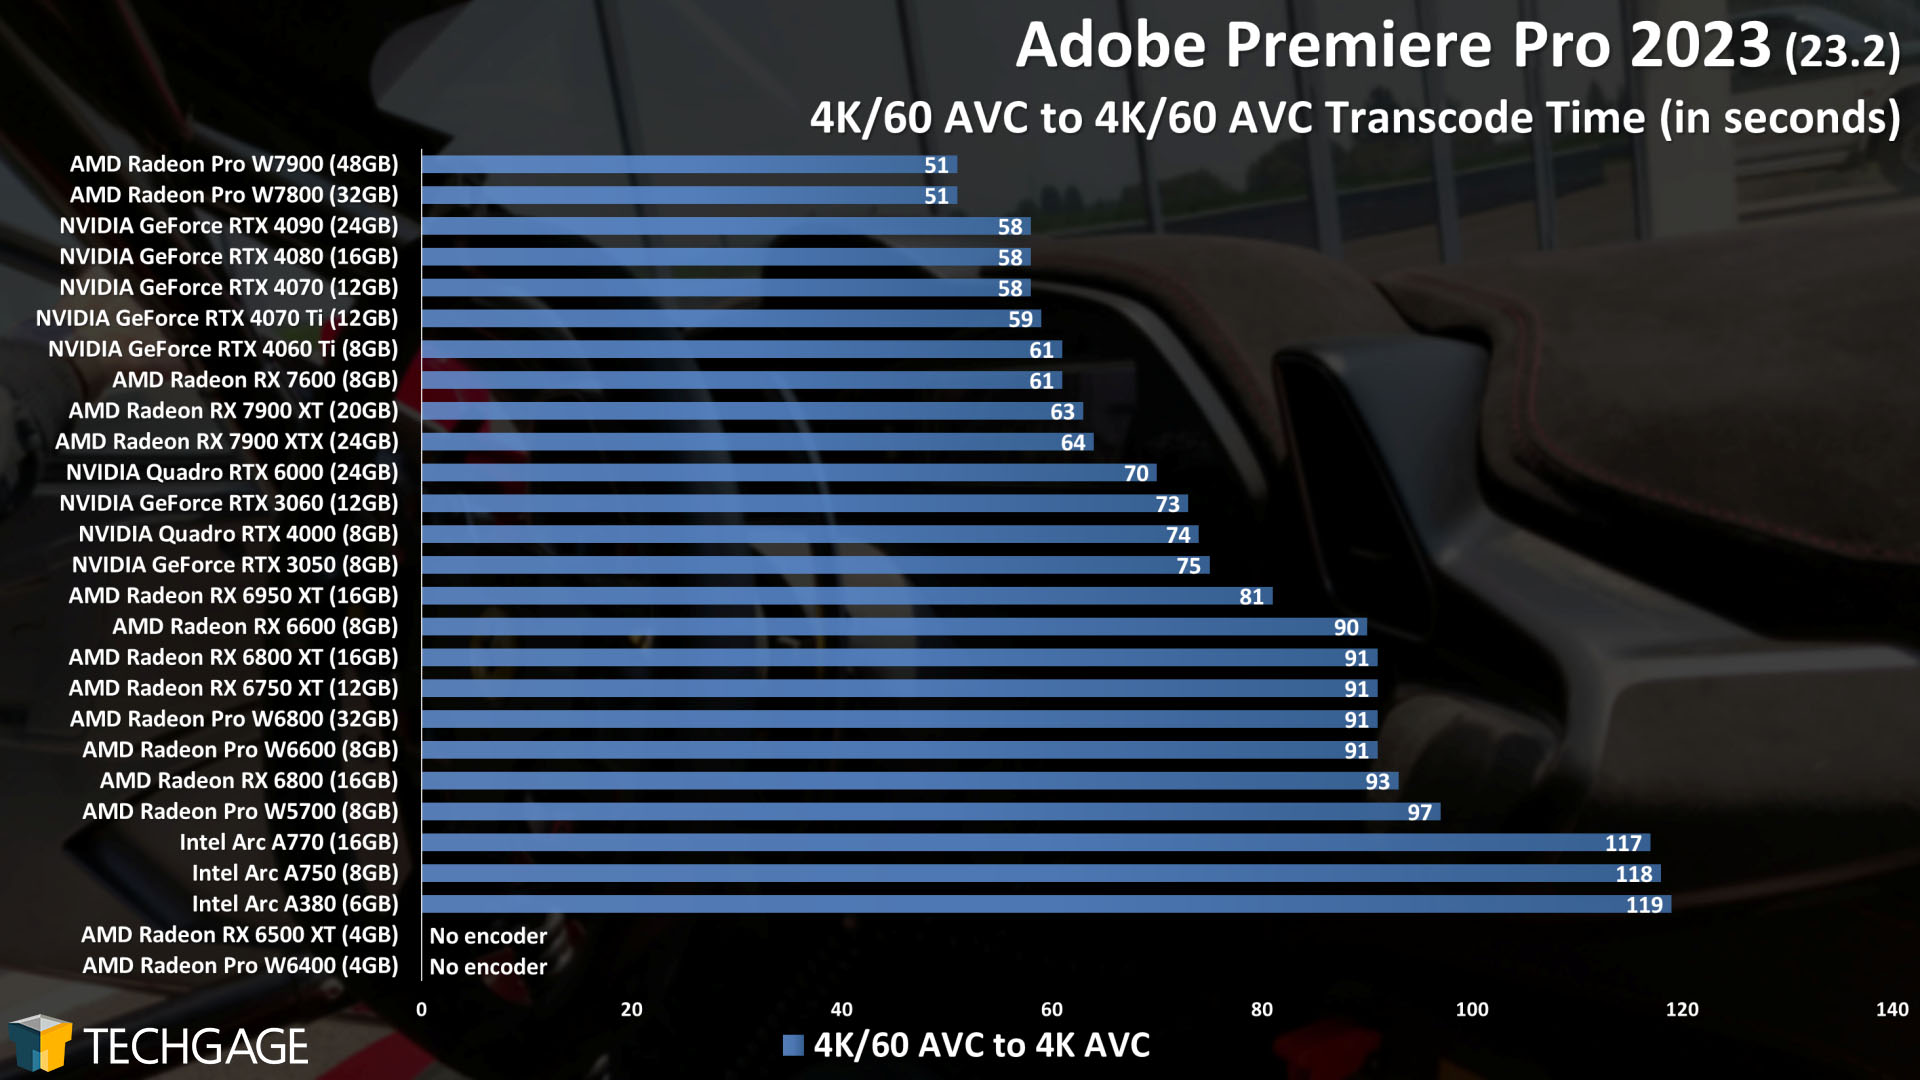 Adobe Premiere Pro - GPU Encoding Performance (4K60 AVC to 4K60 AVC)